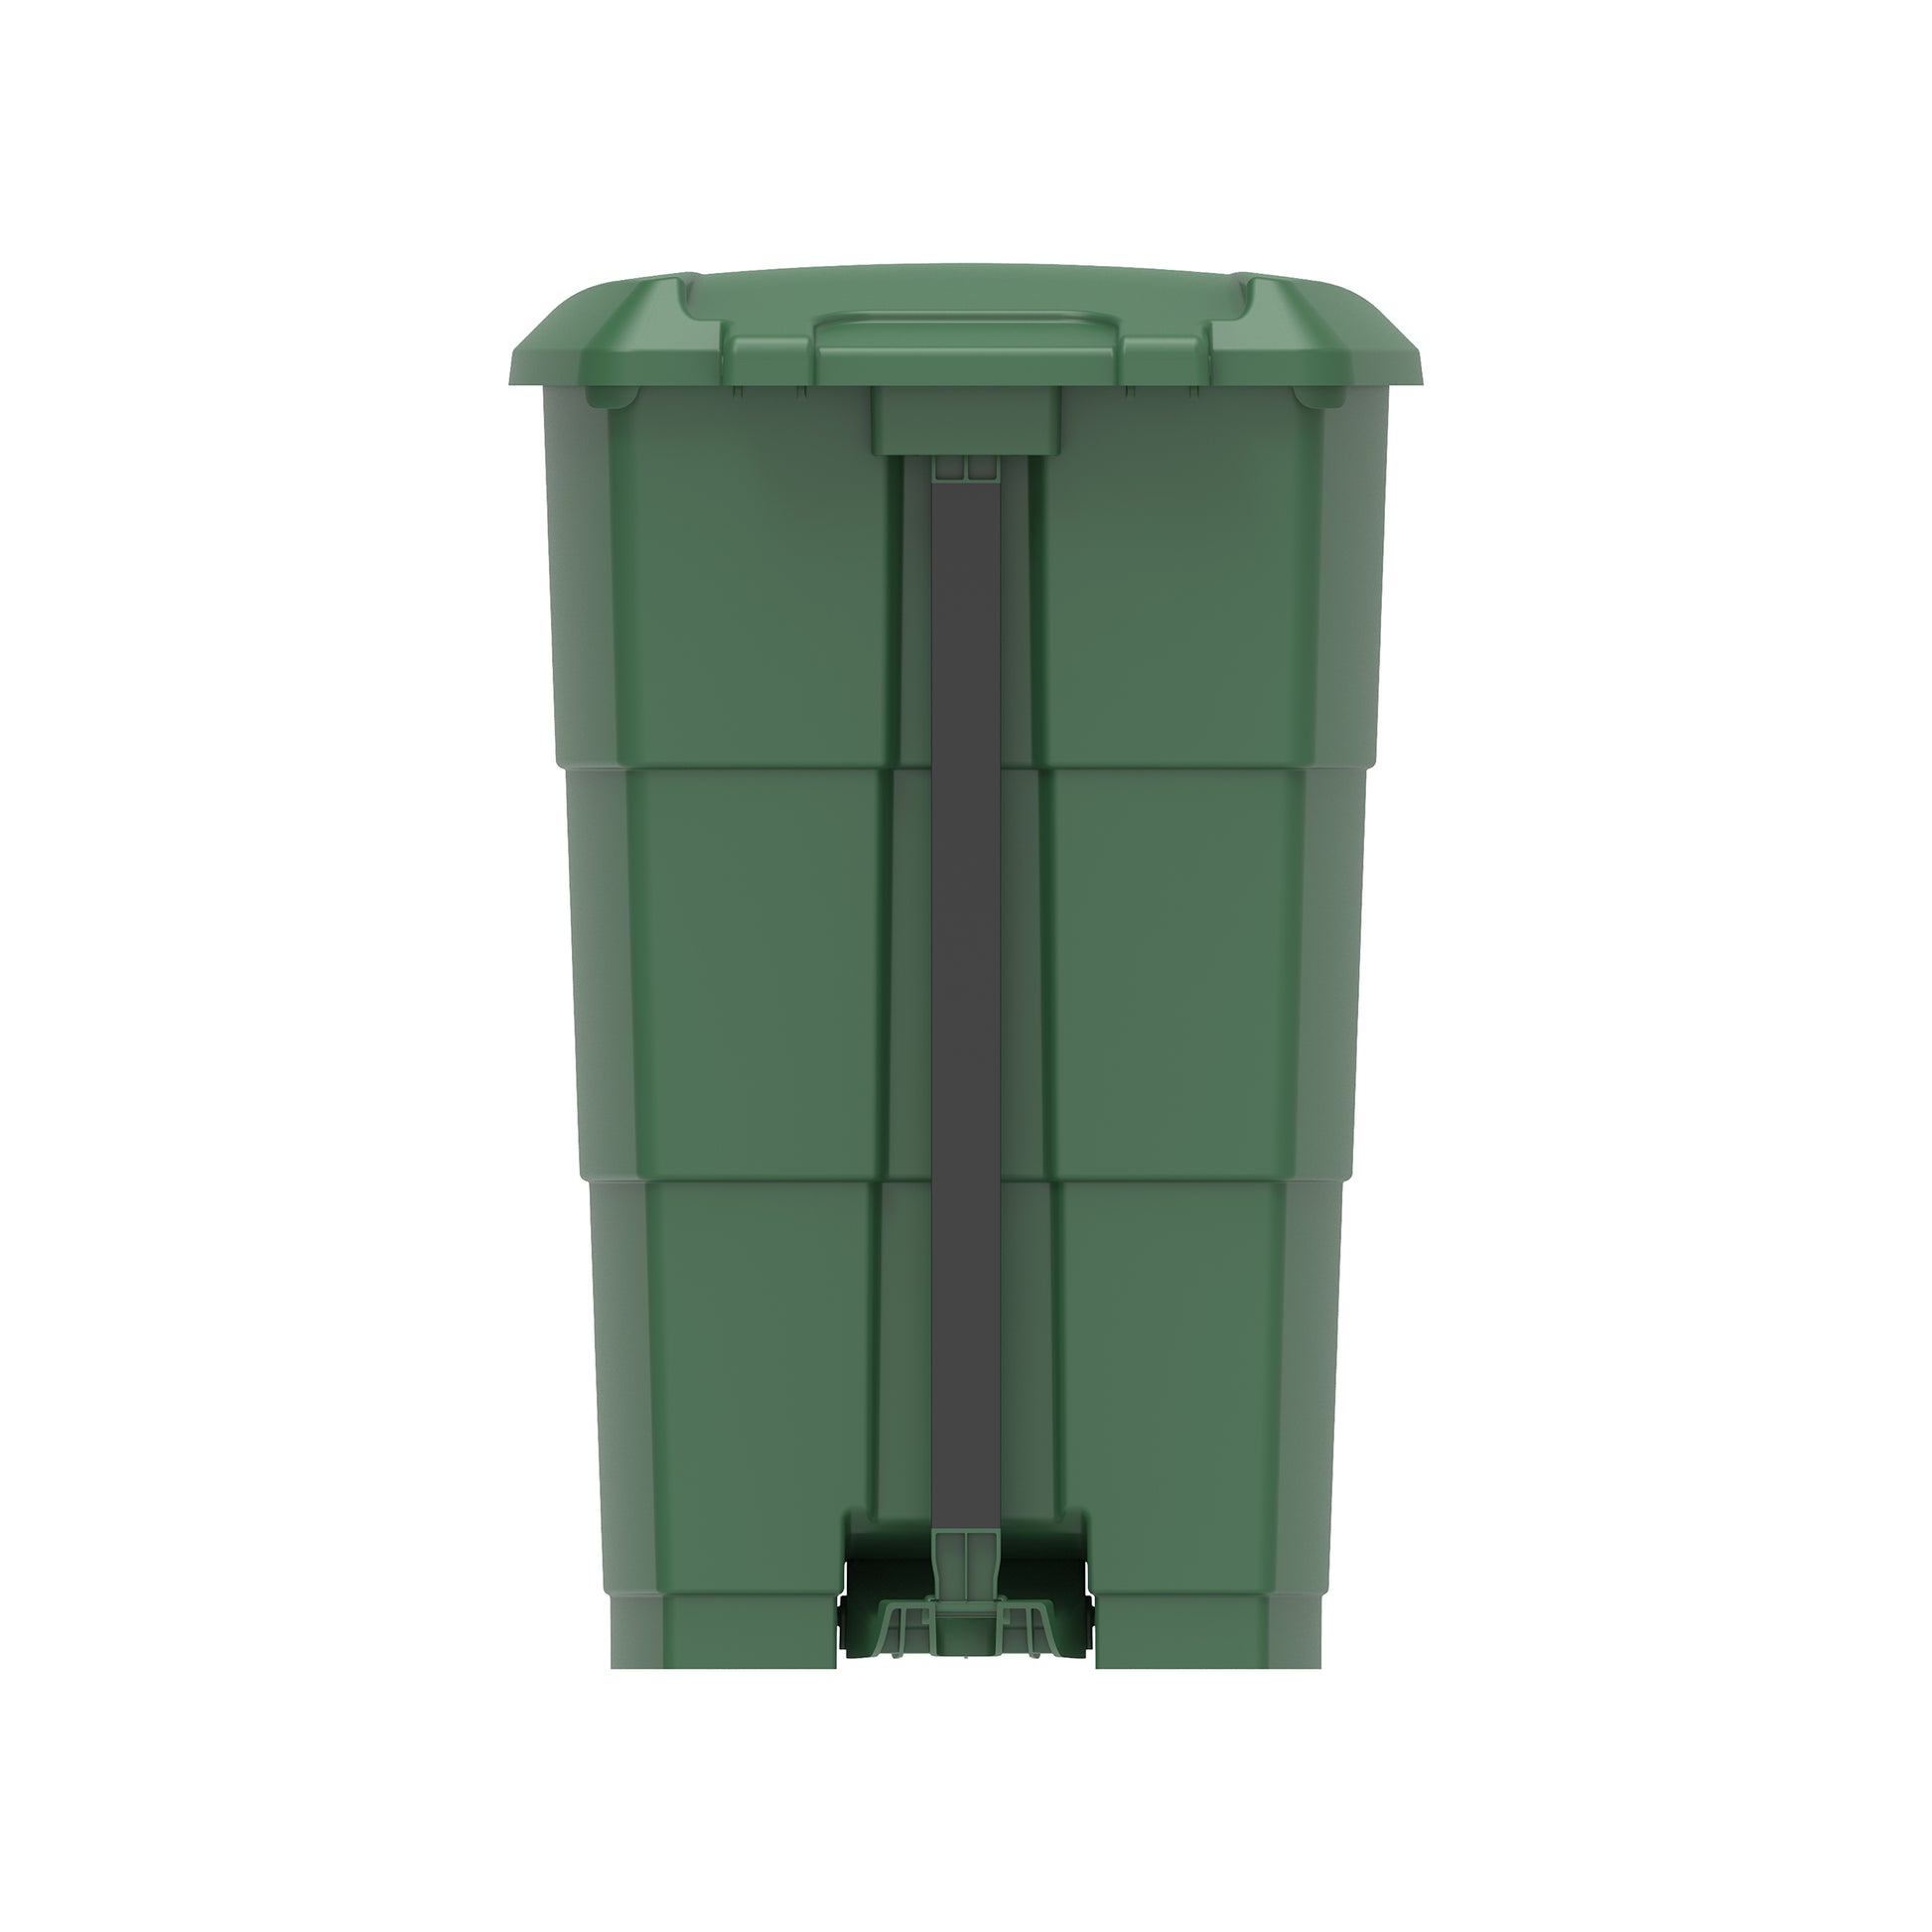 waste bins, pedal bins, wastepaper baskets, touch top bins